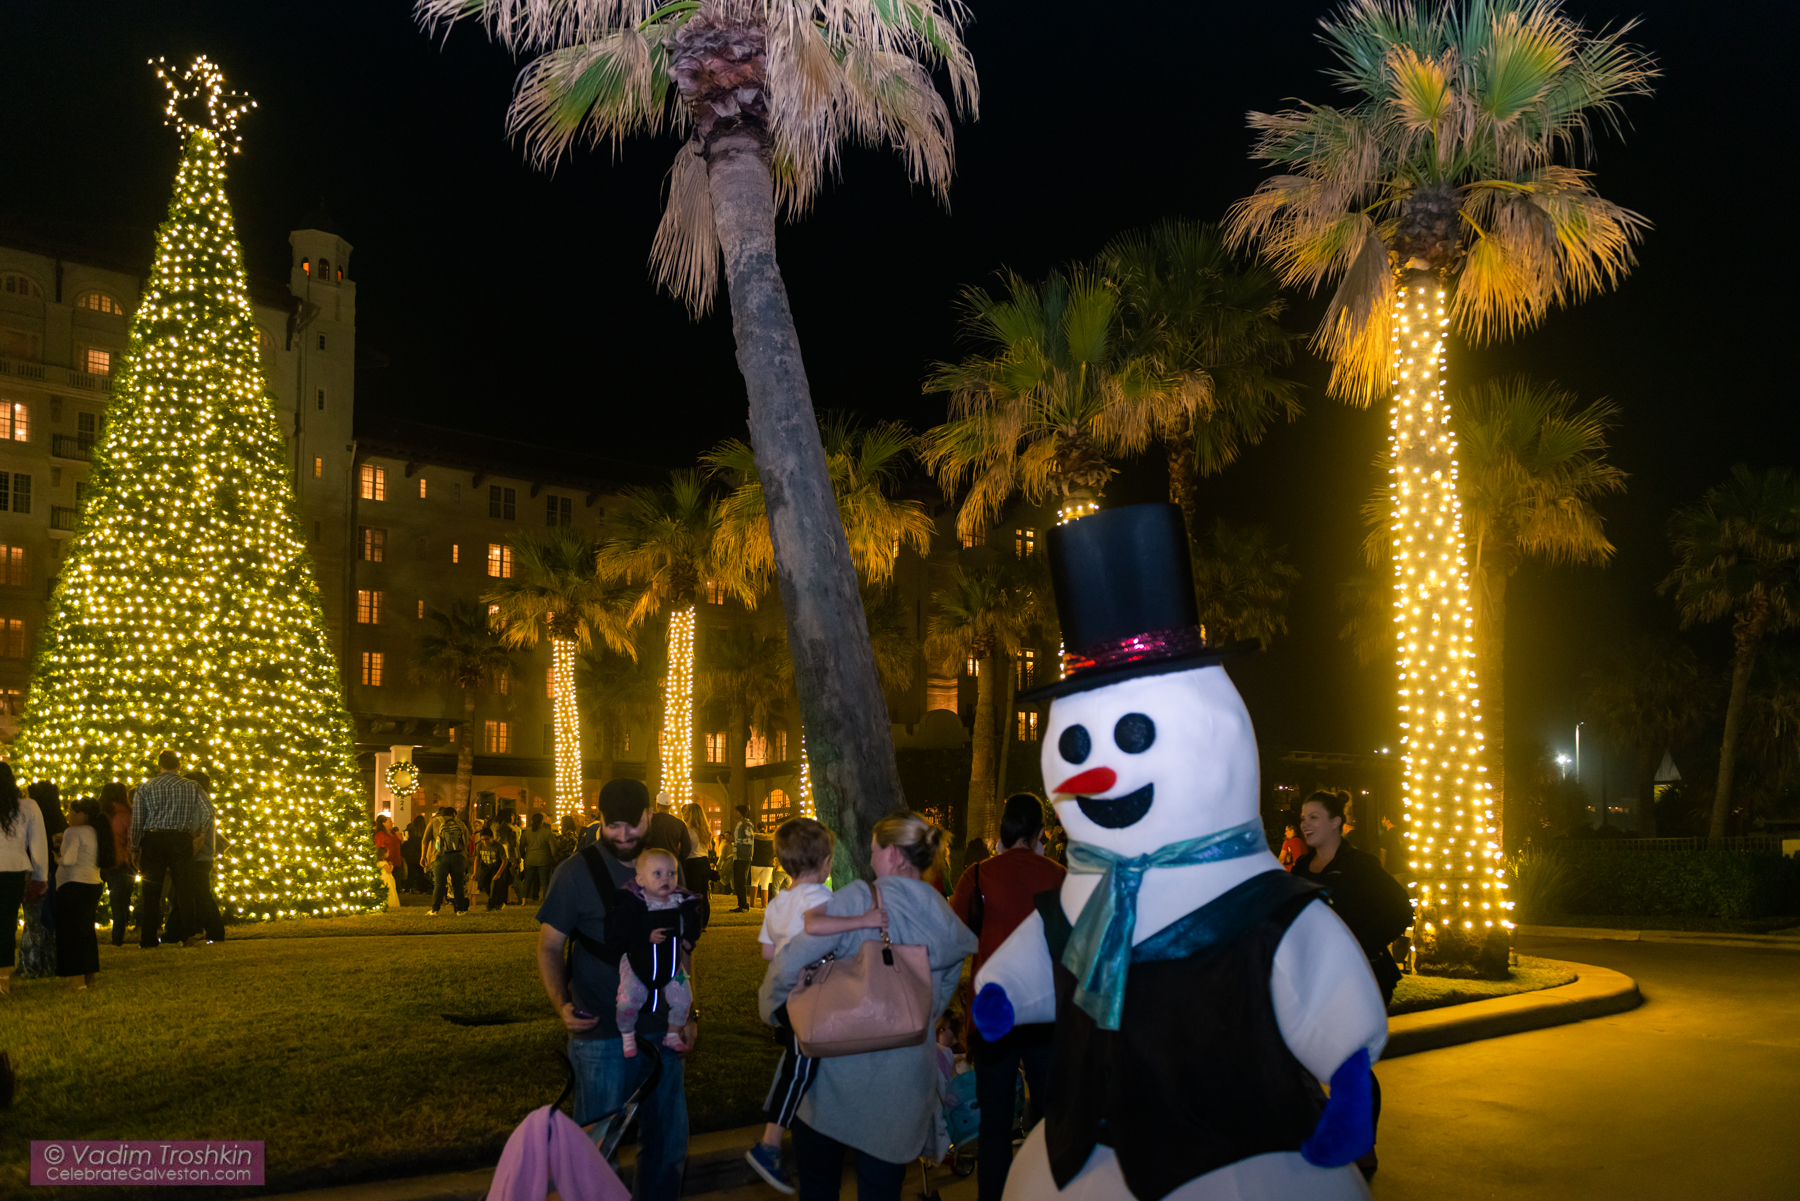 Galveston Holiday Lighting Celebration 